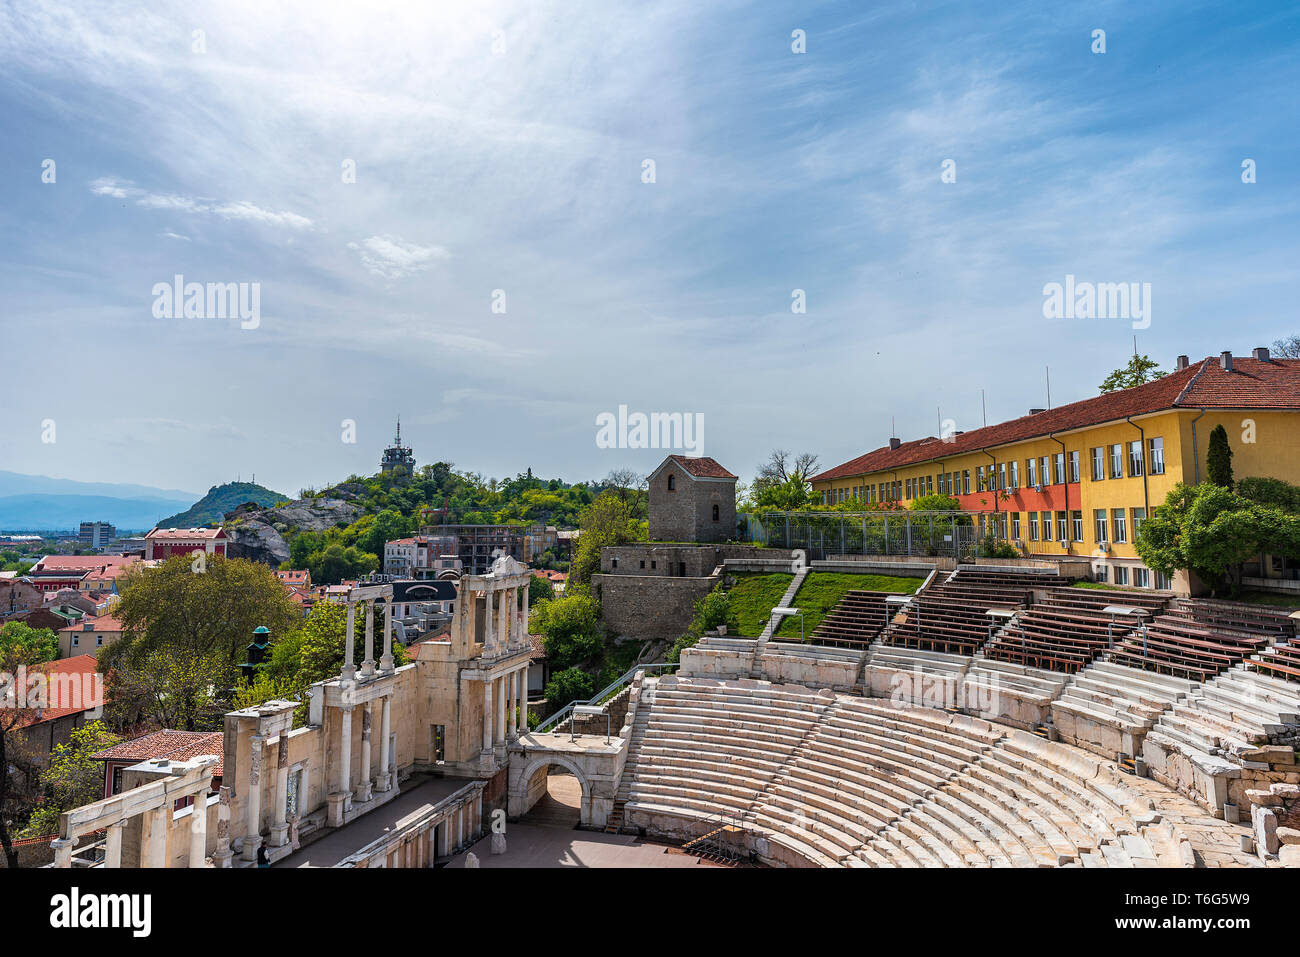 Sonnigen Nachmittag über römische Amphitheater in Plovdiv Stadt - Europäische Kulturhauptstadt 2019, Bulgarien. Stockfoto